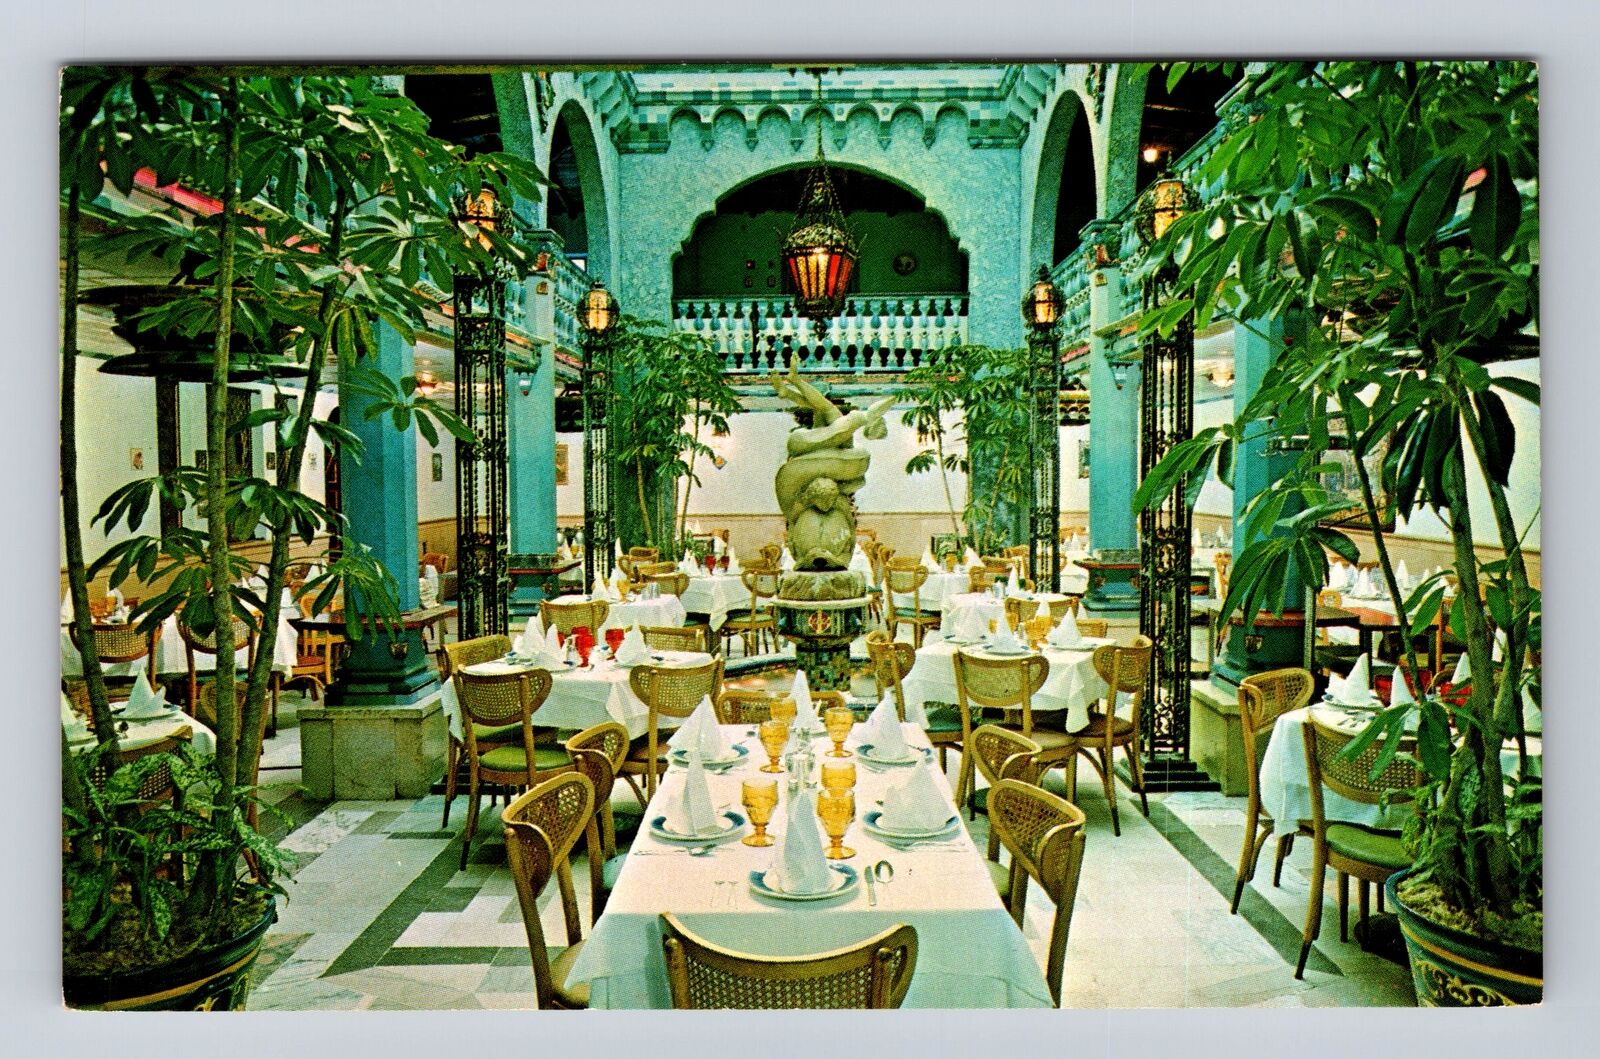 Tampa FL-Florida, The Columbia Restaurant Advertising, Vintage Souvenir Postcard